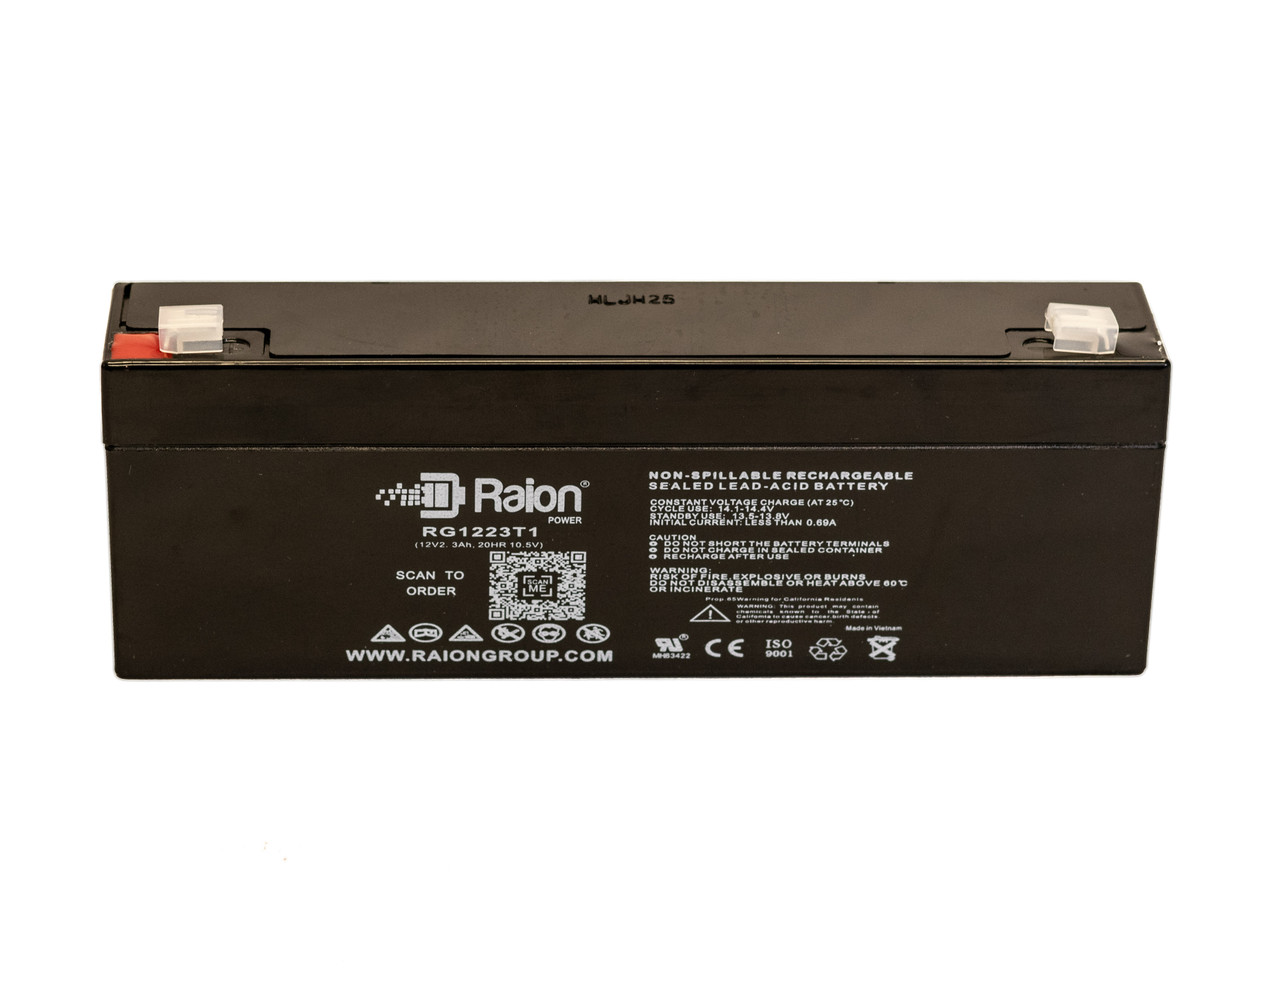 Raion Power 12V 2.3Ah SLA Battery With T1 Terminals For Hoffman Laroche 7501 Defibrillator